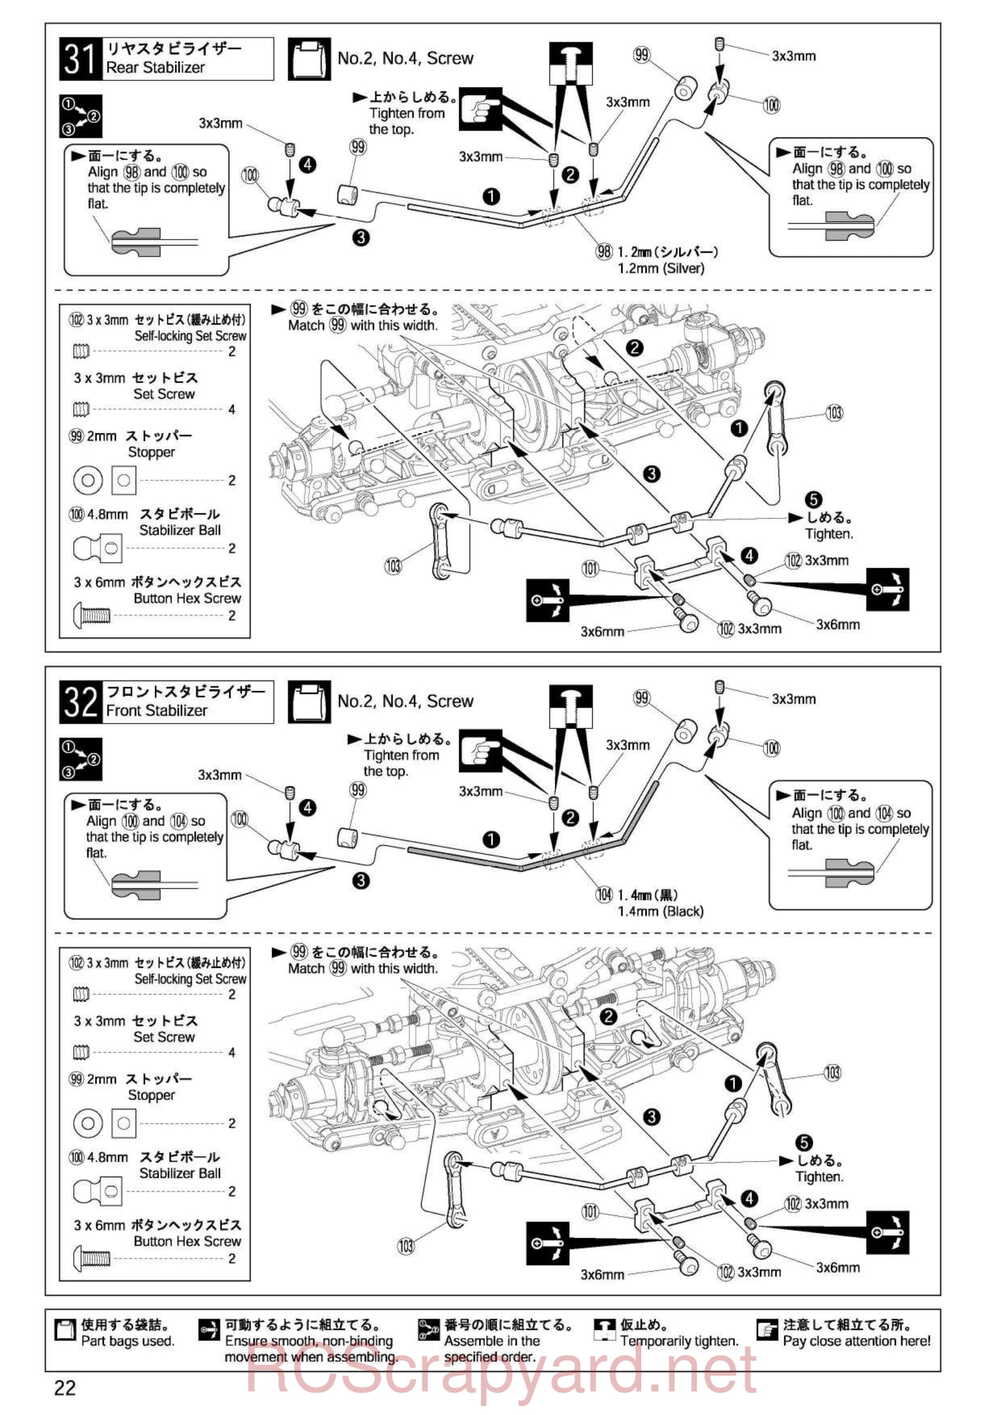 Kyosho - 30023 - Stalion-Shin - Manual - Page 22